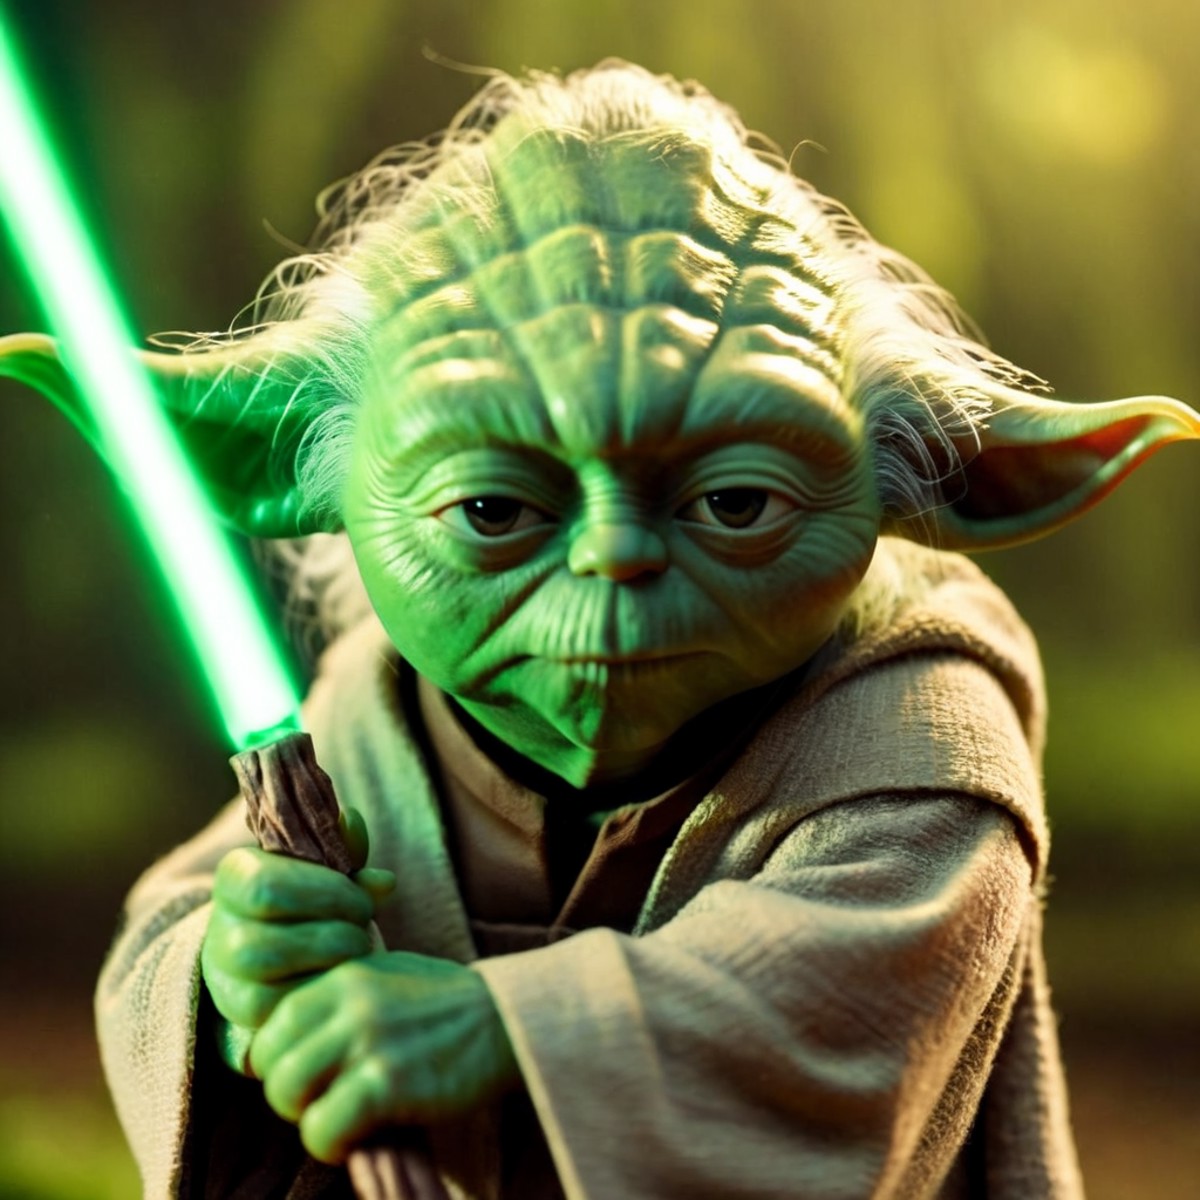 cinematic film still of  <lora:Yoda:1.2>
Yoda a cartoon yoda is holding a stick In Star Wars Universe, shallow depth of fi...